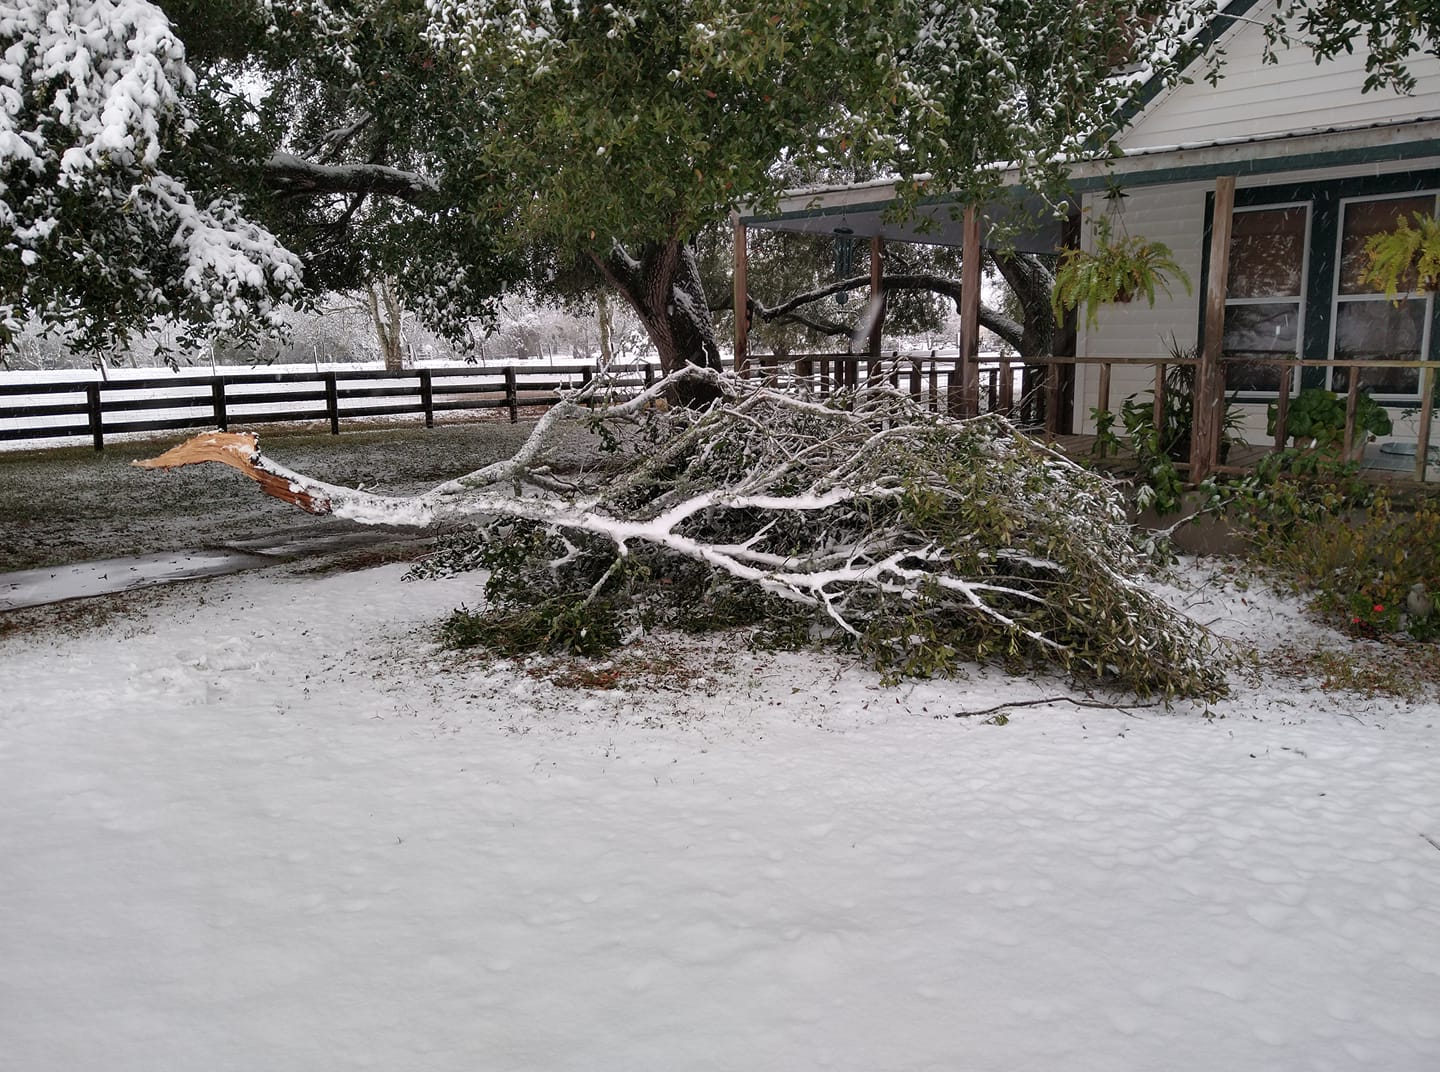 Tree Limb Down in Caldwell (via Dan Kuciemba on Facebook)